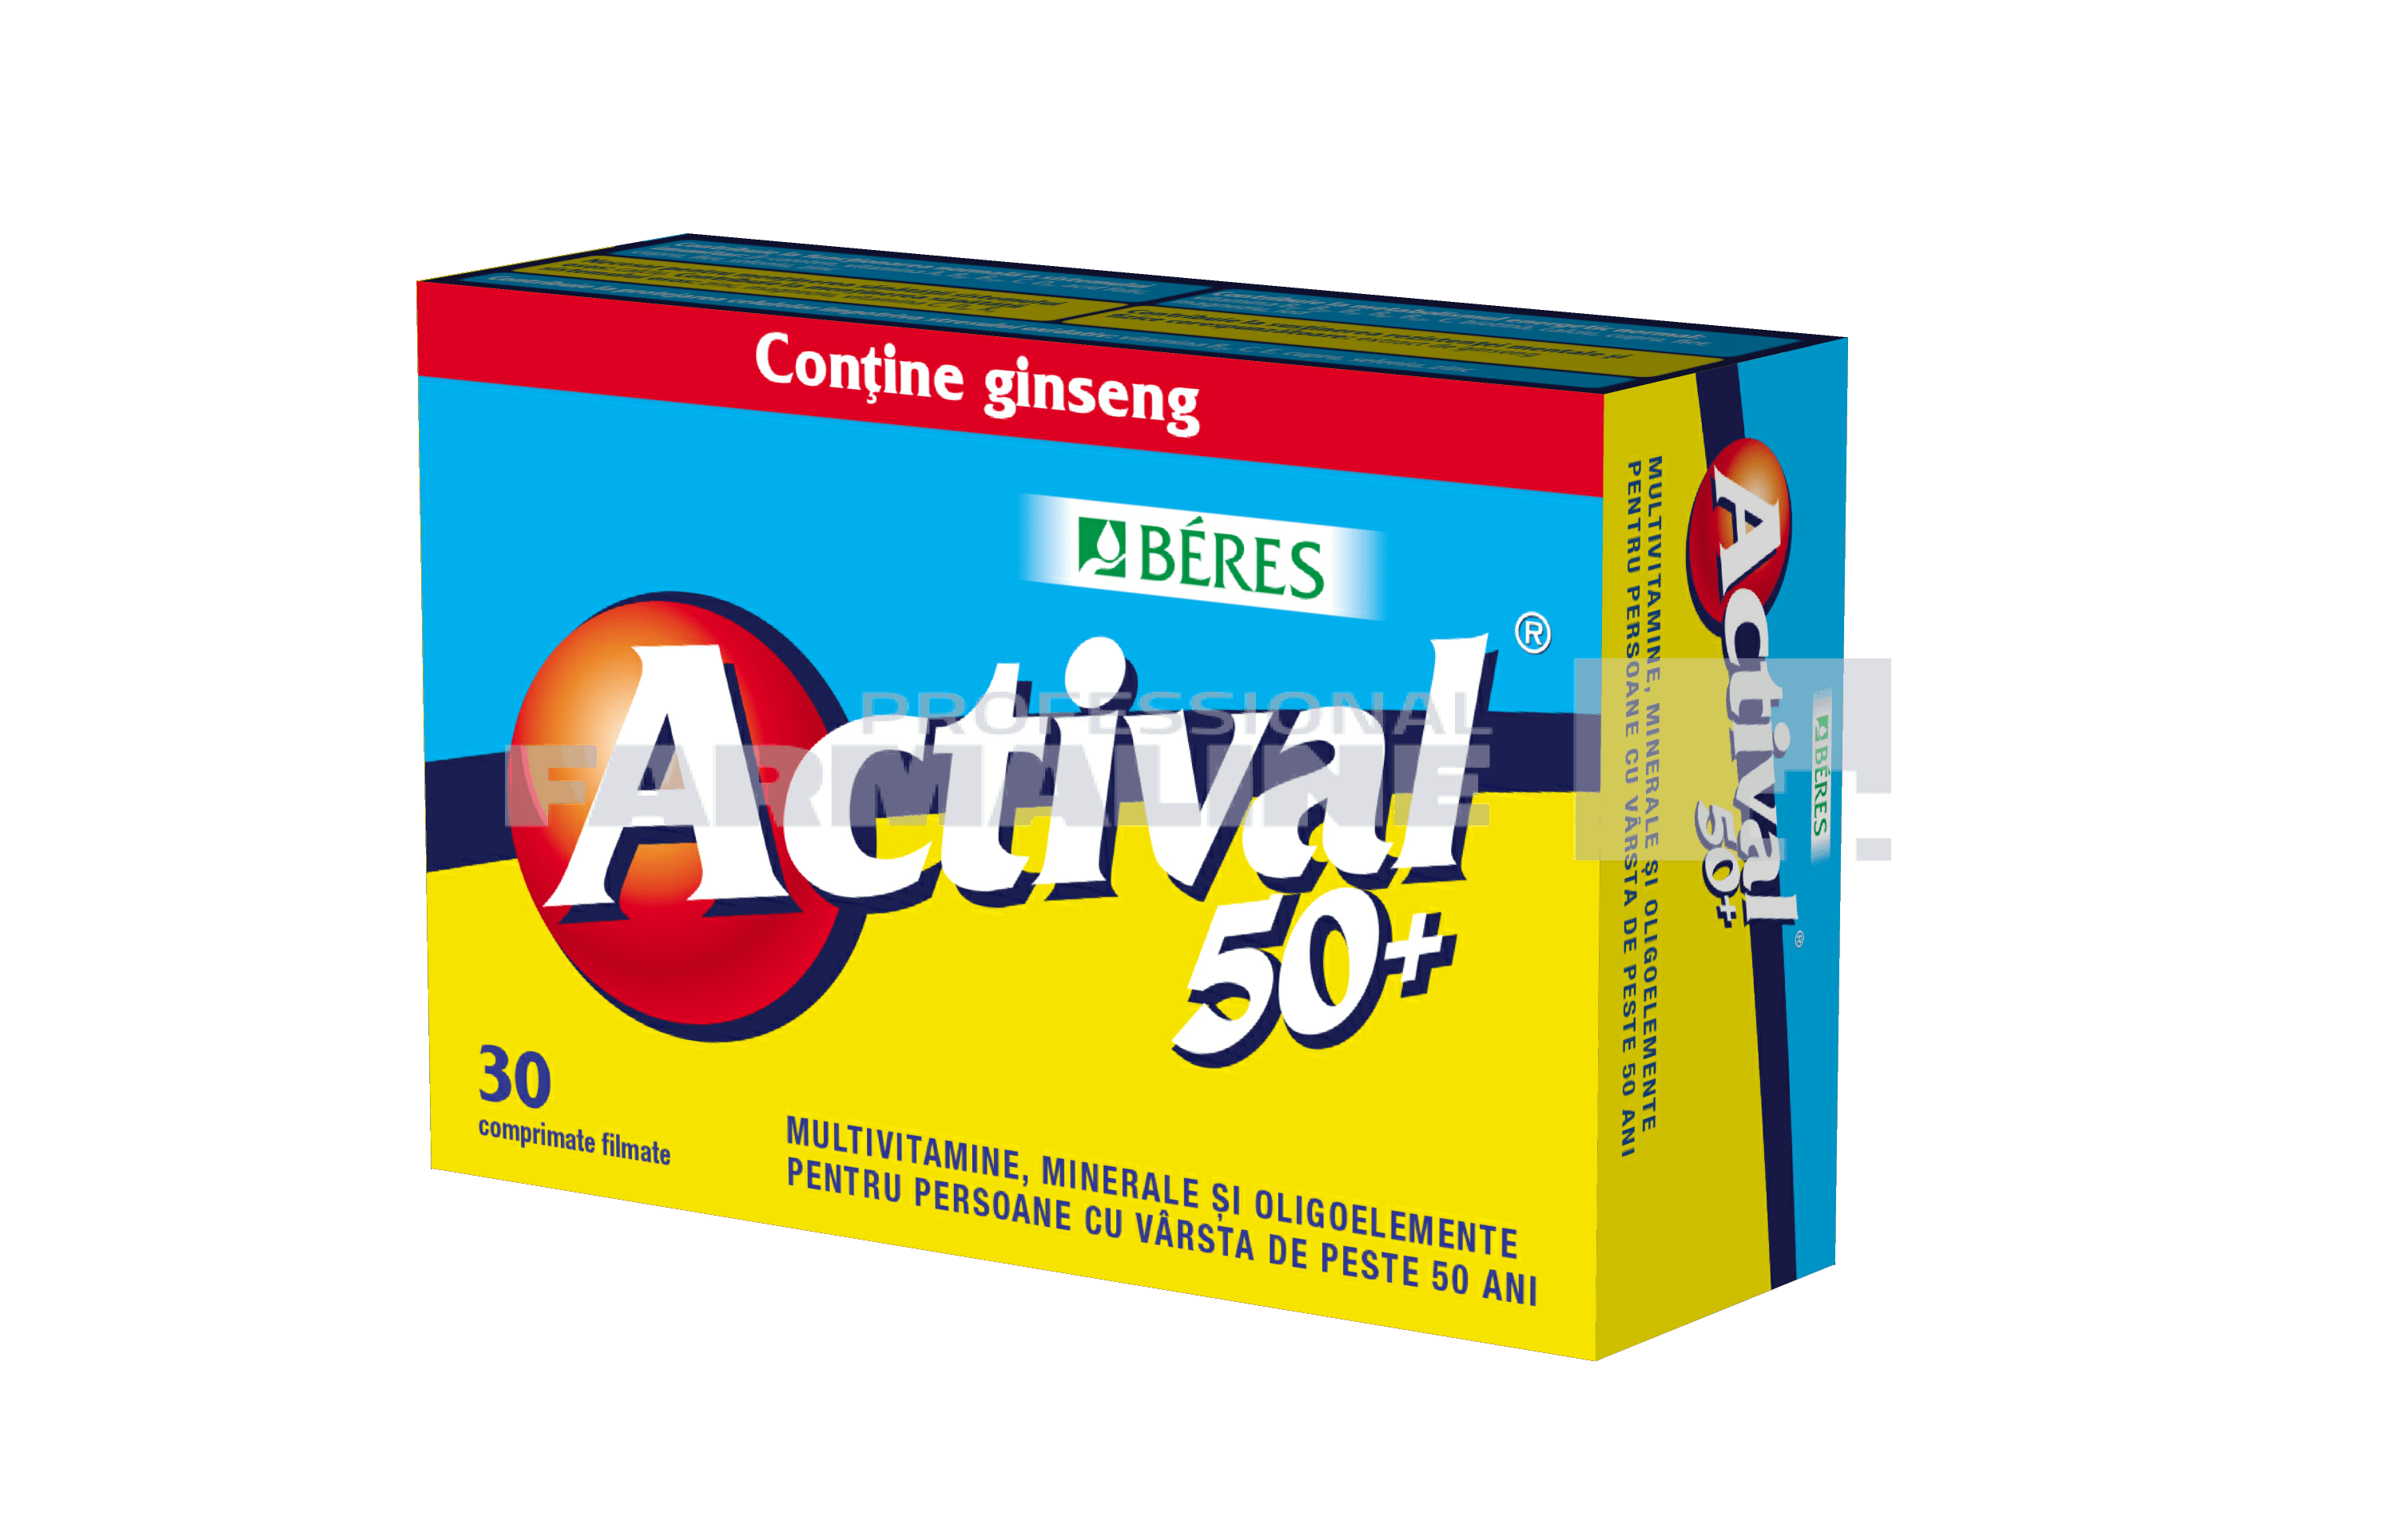 Beres Actival 50+ 30 comprimate